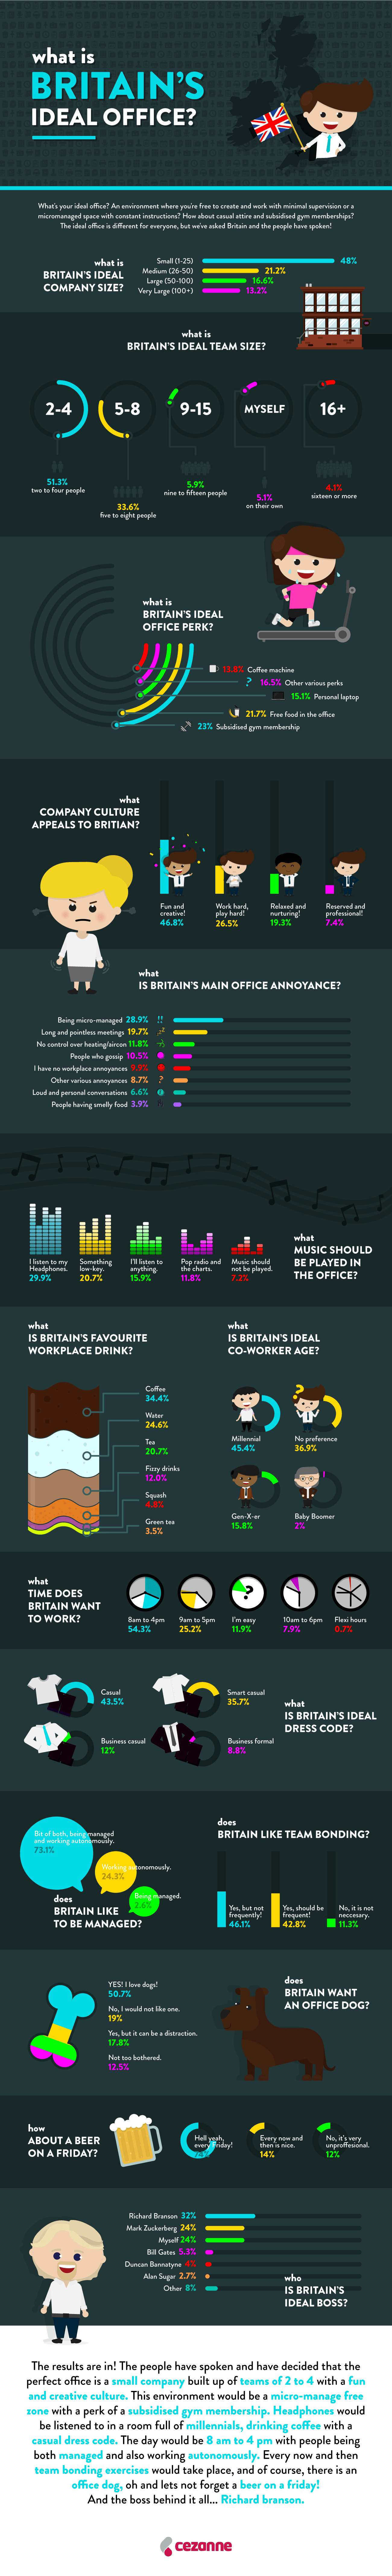 Idea office - infographic